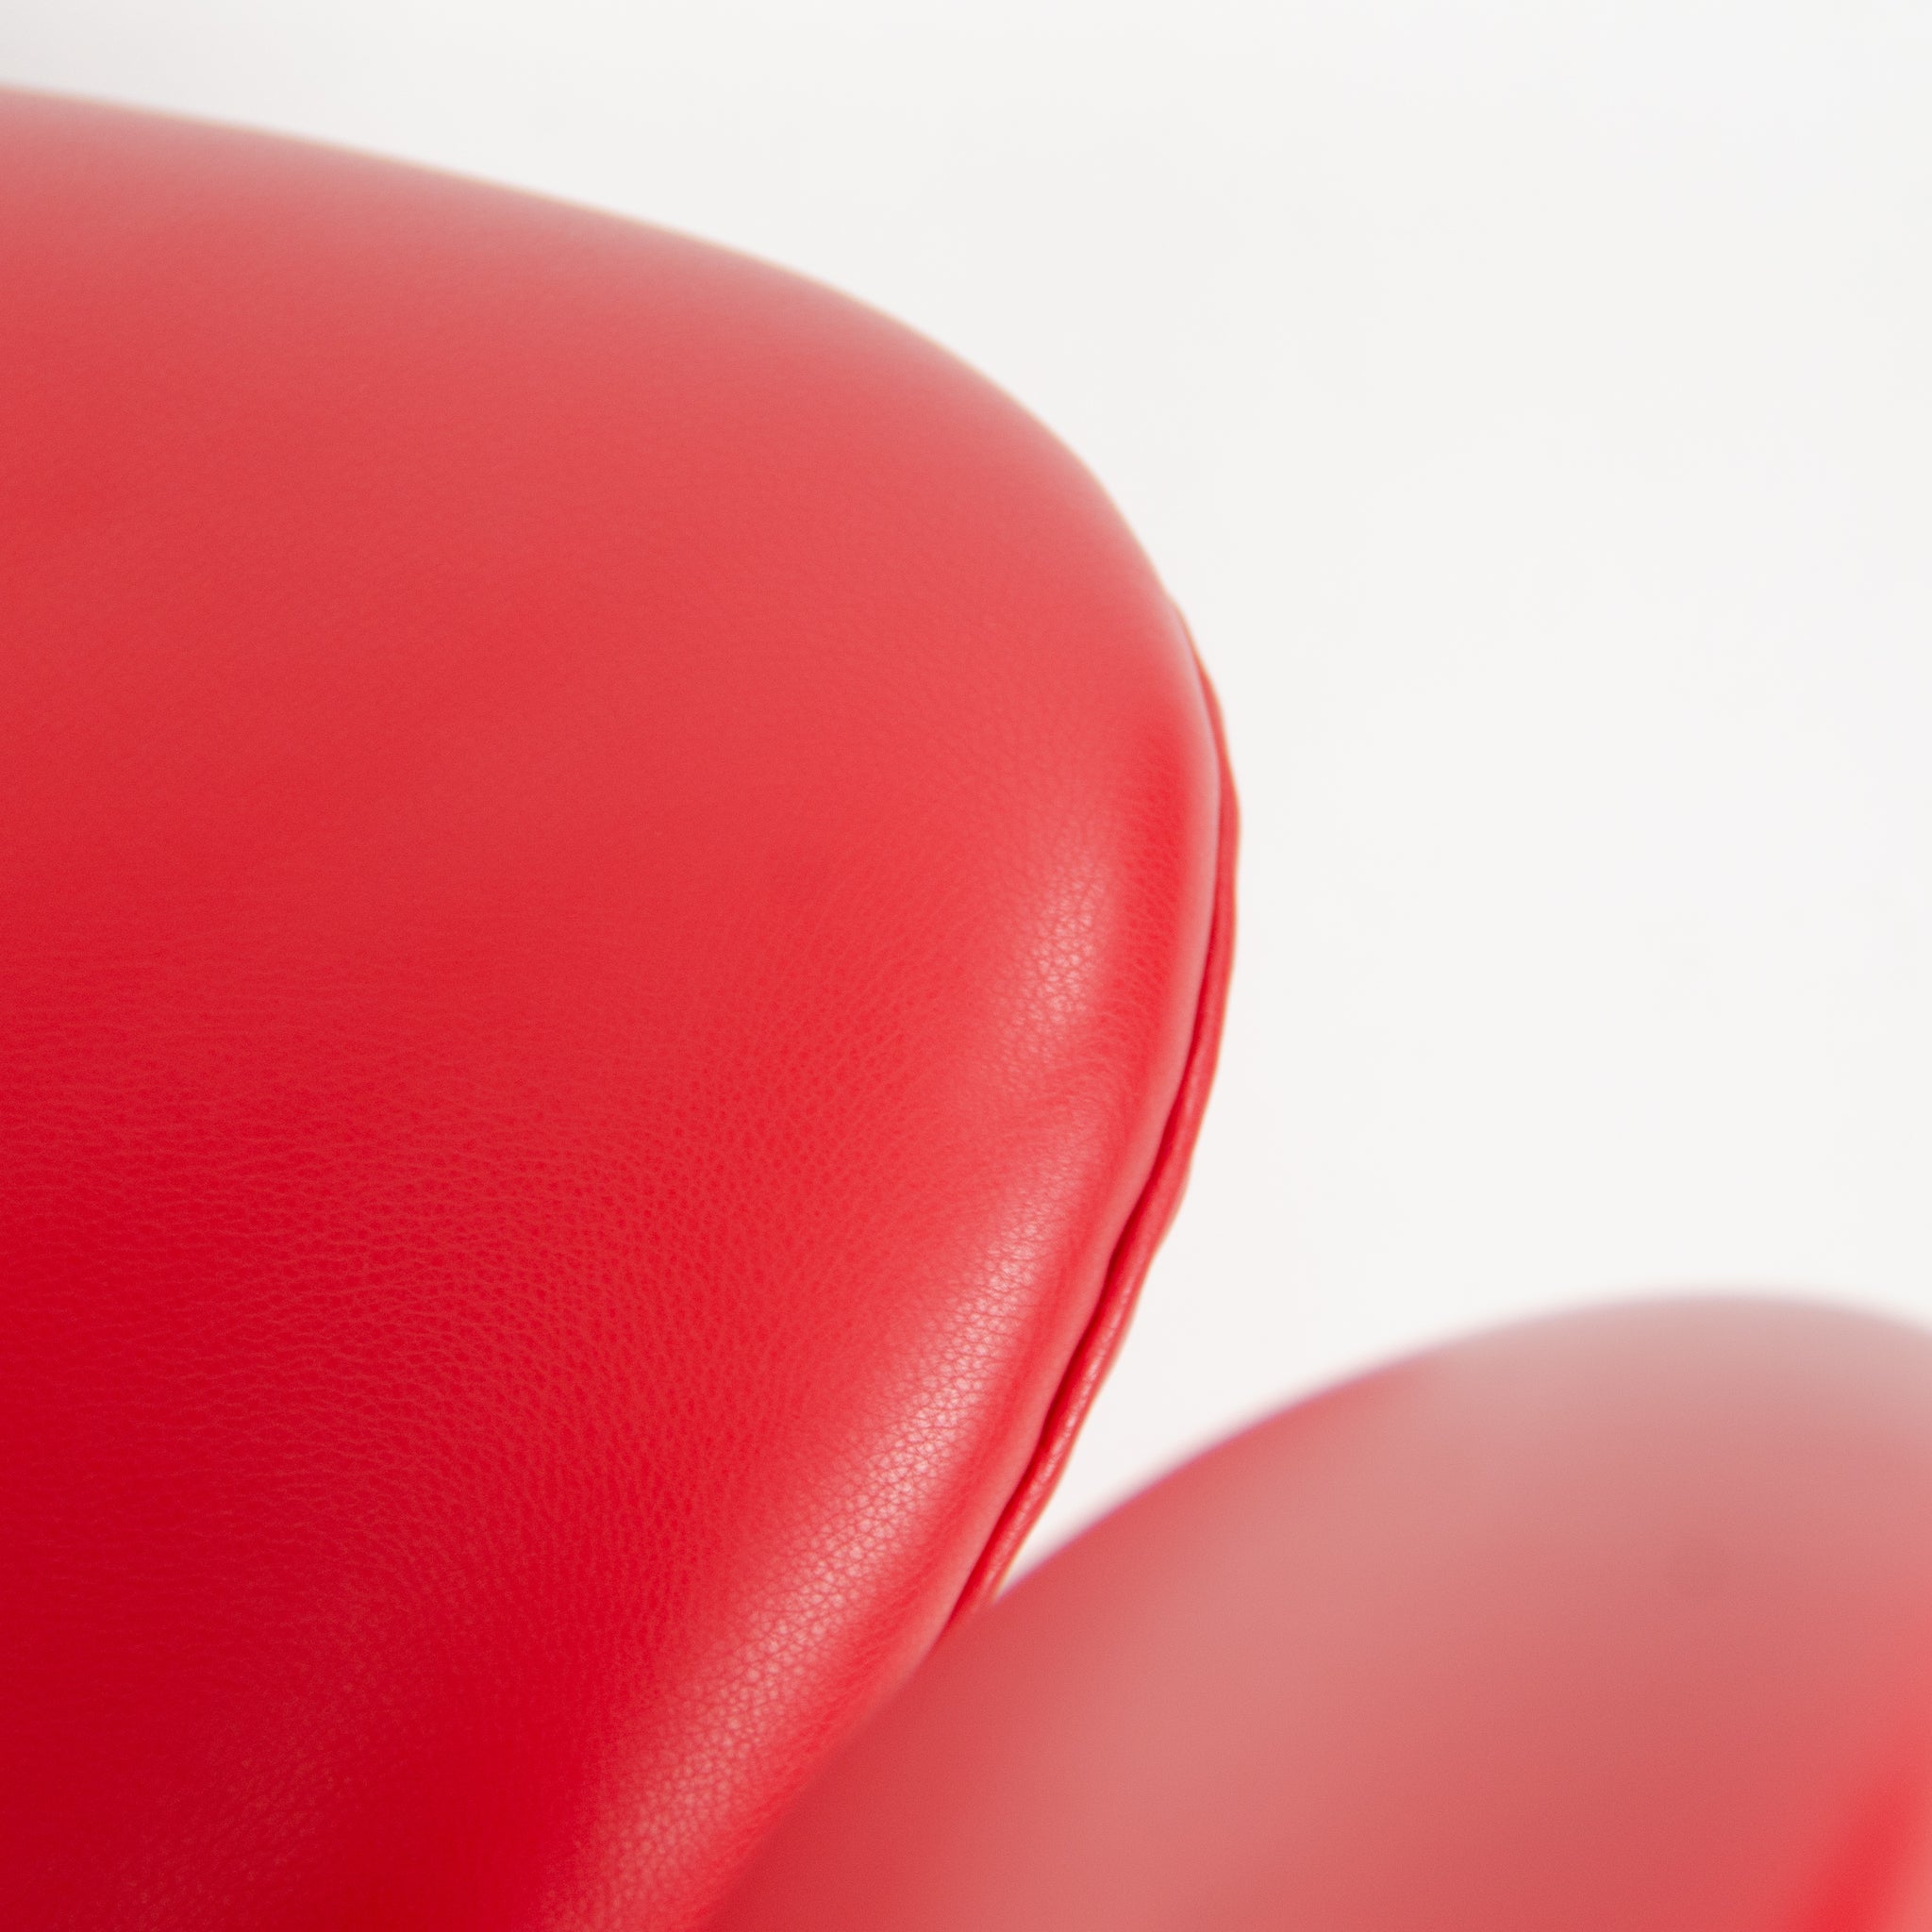 2012 Arne Jacobsen Fritz Hansen Denmark Swan Chairs Leather Upholstery Knoll 4x Available